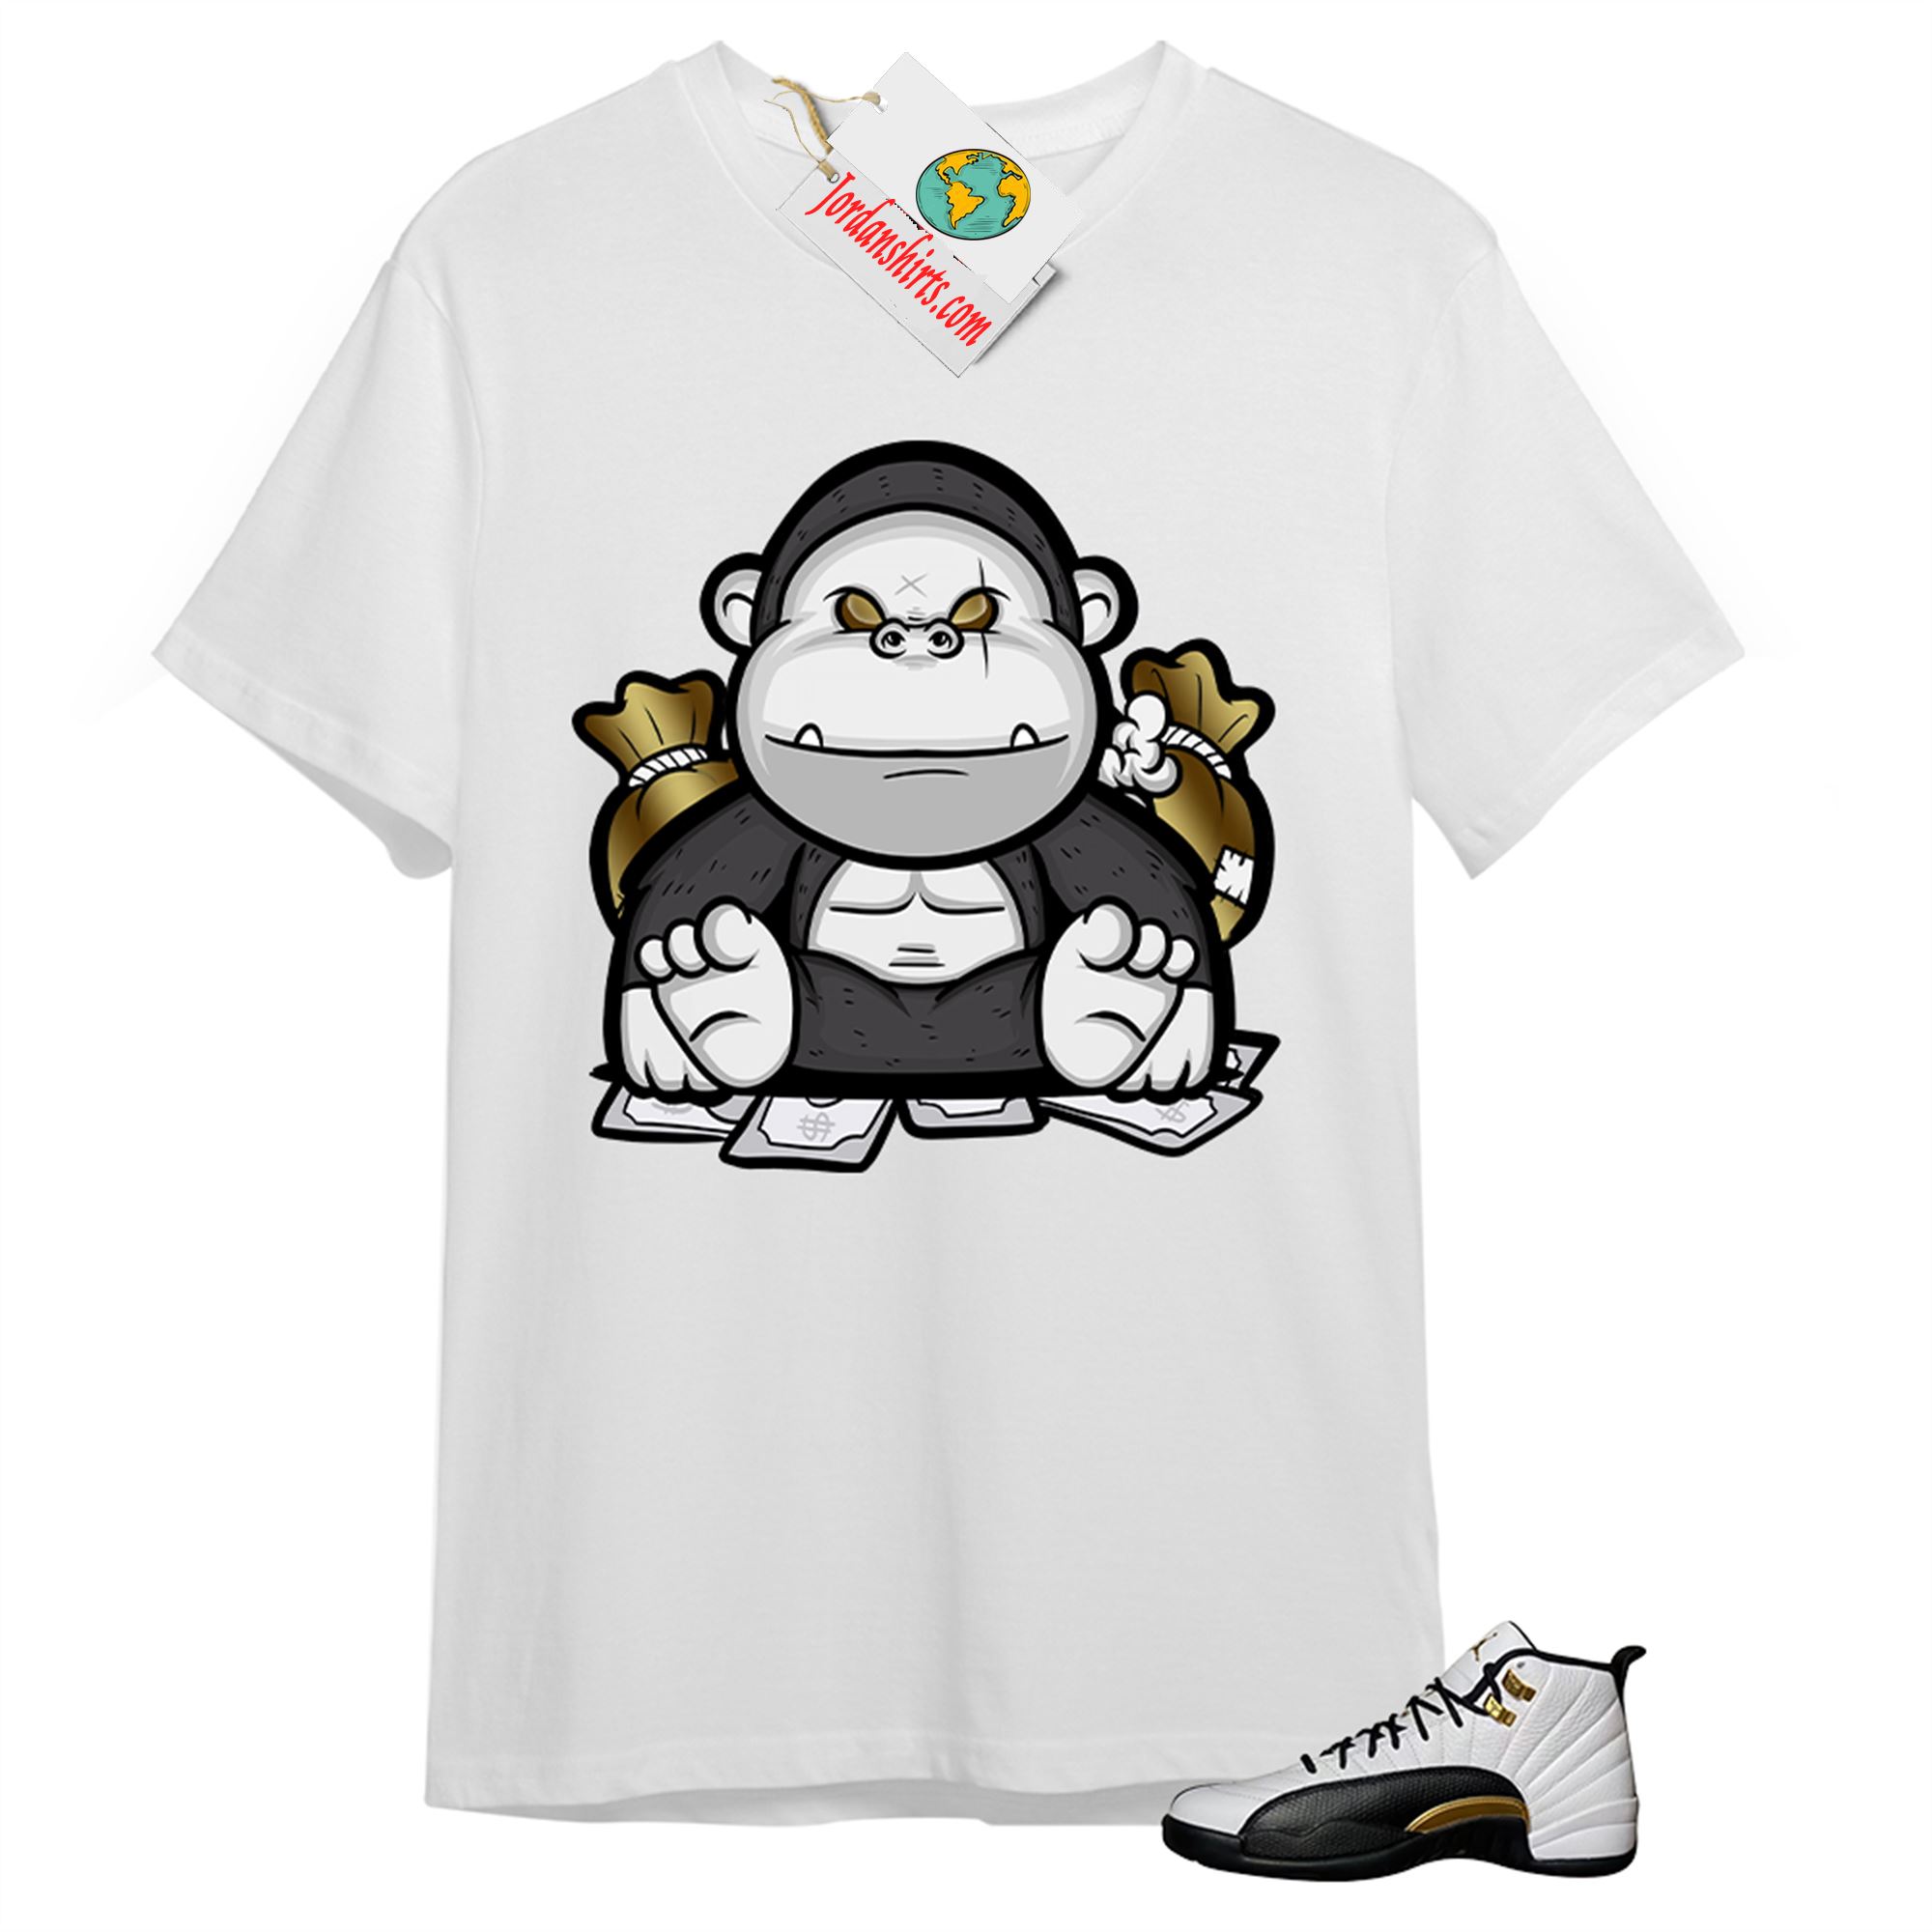 Jordan 12 Shirt, Rich Gorilla With Money White T-shirt Air Jordan 12 Royalty 12s Full Size Up To 5xl